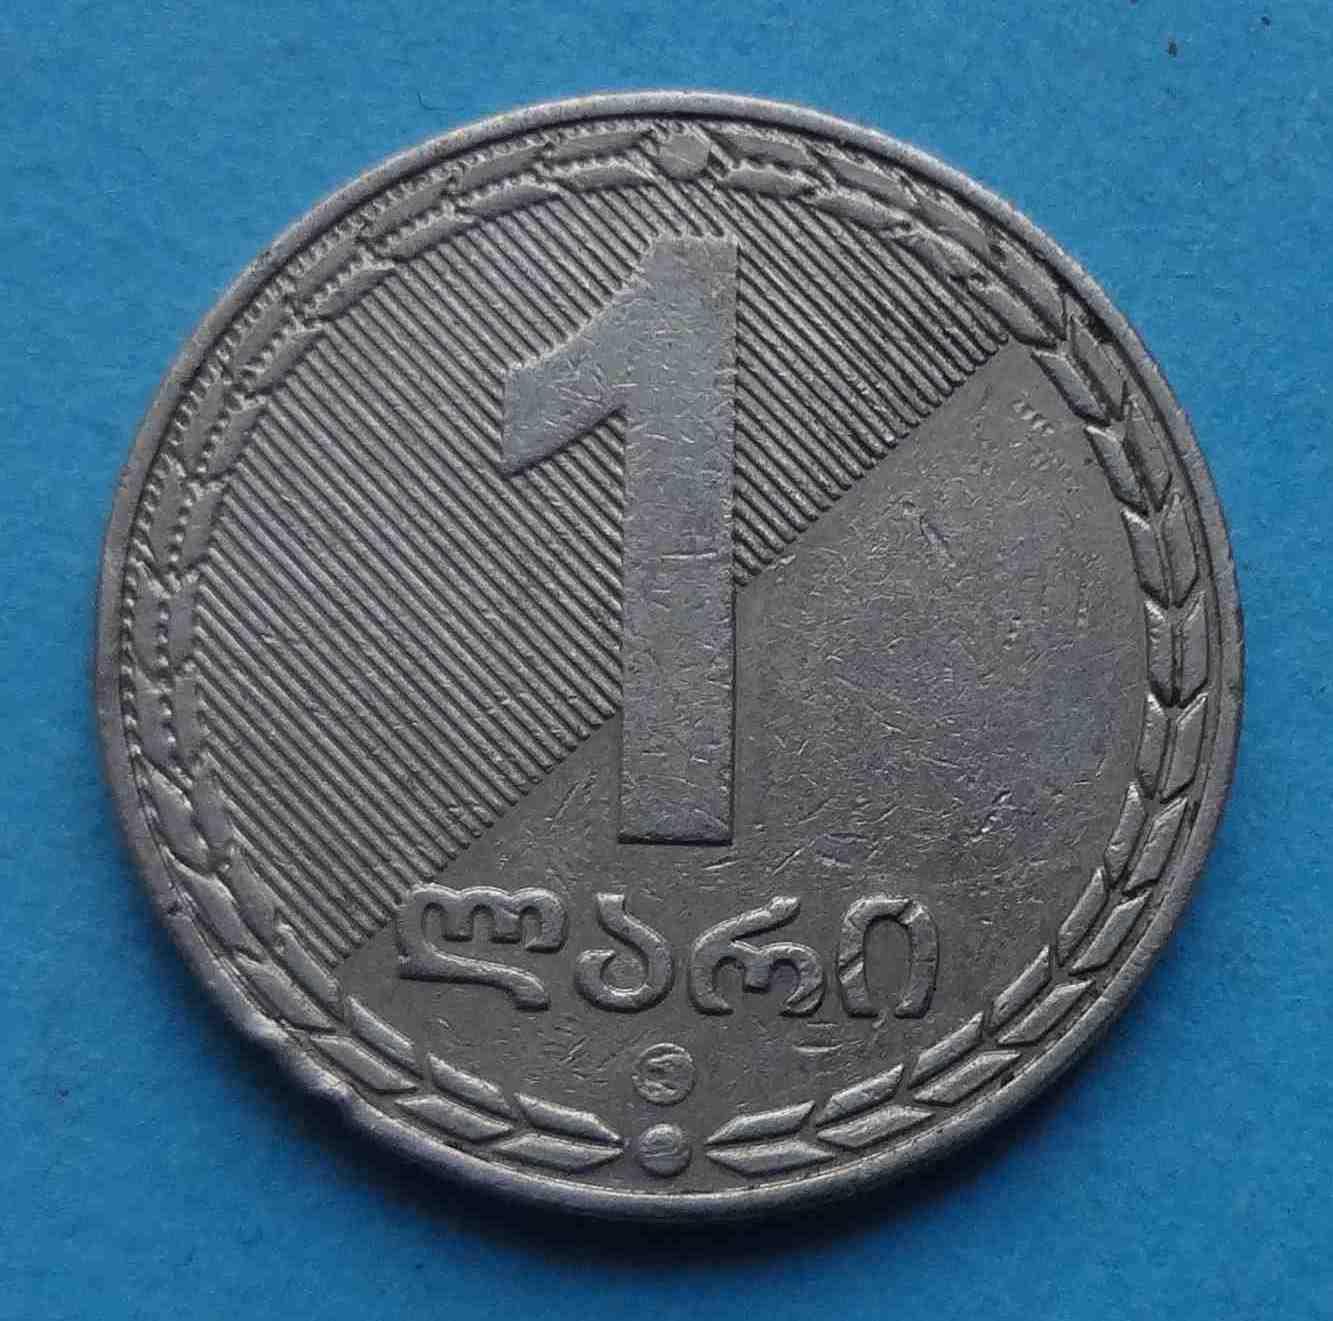 Грузия 1 лари 2006 год